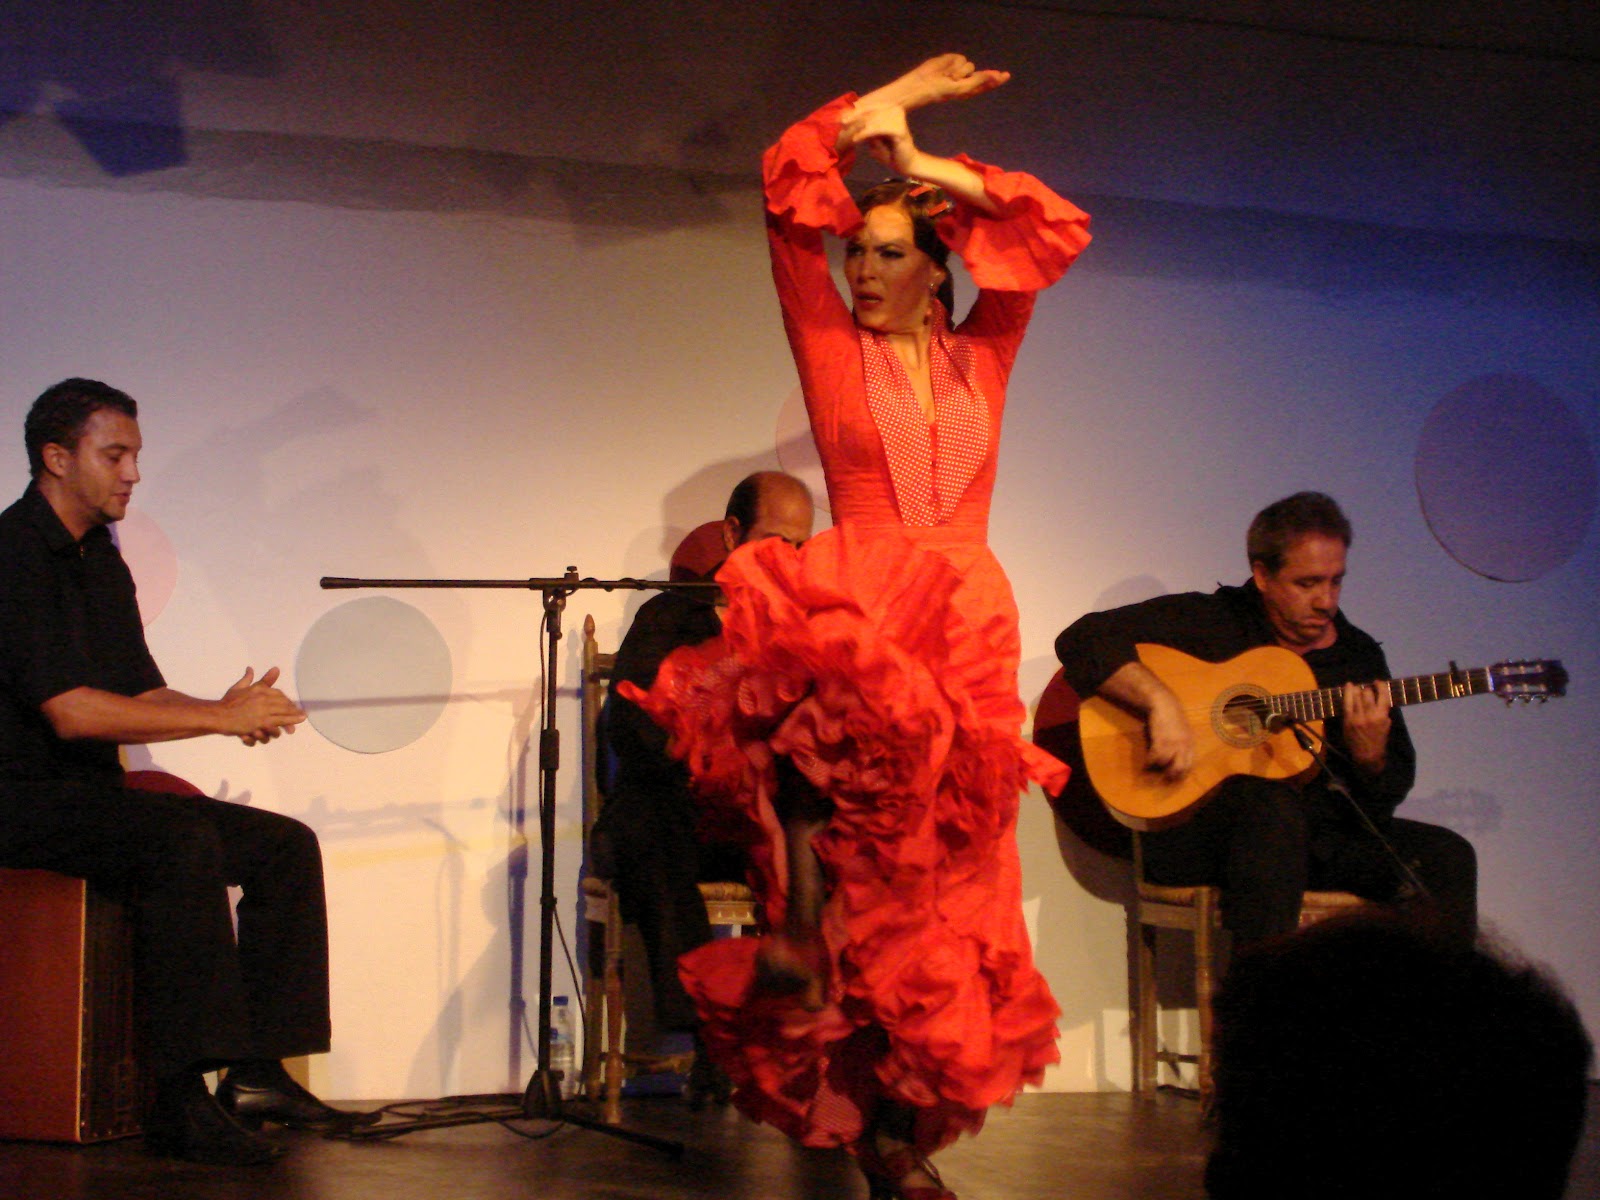 Falda flamenca Vega de baile flamenco de uso profesional y ensayo.